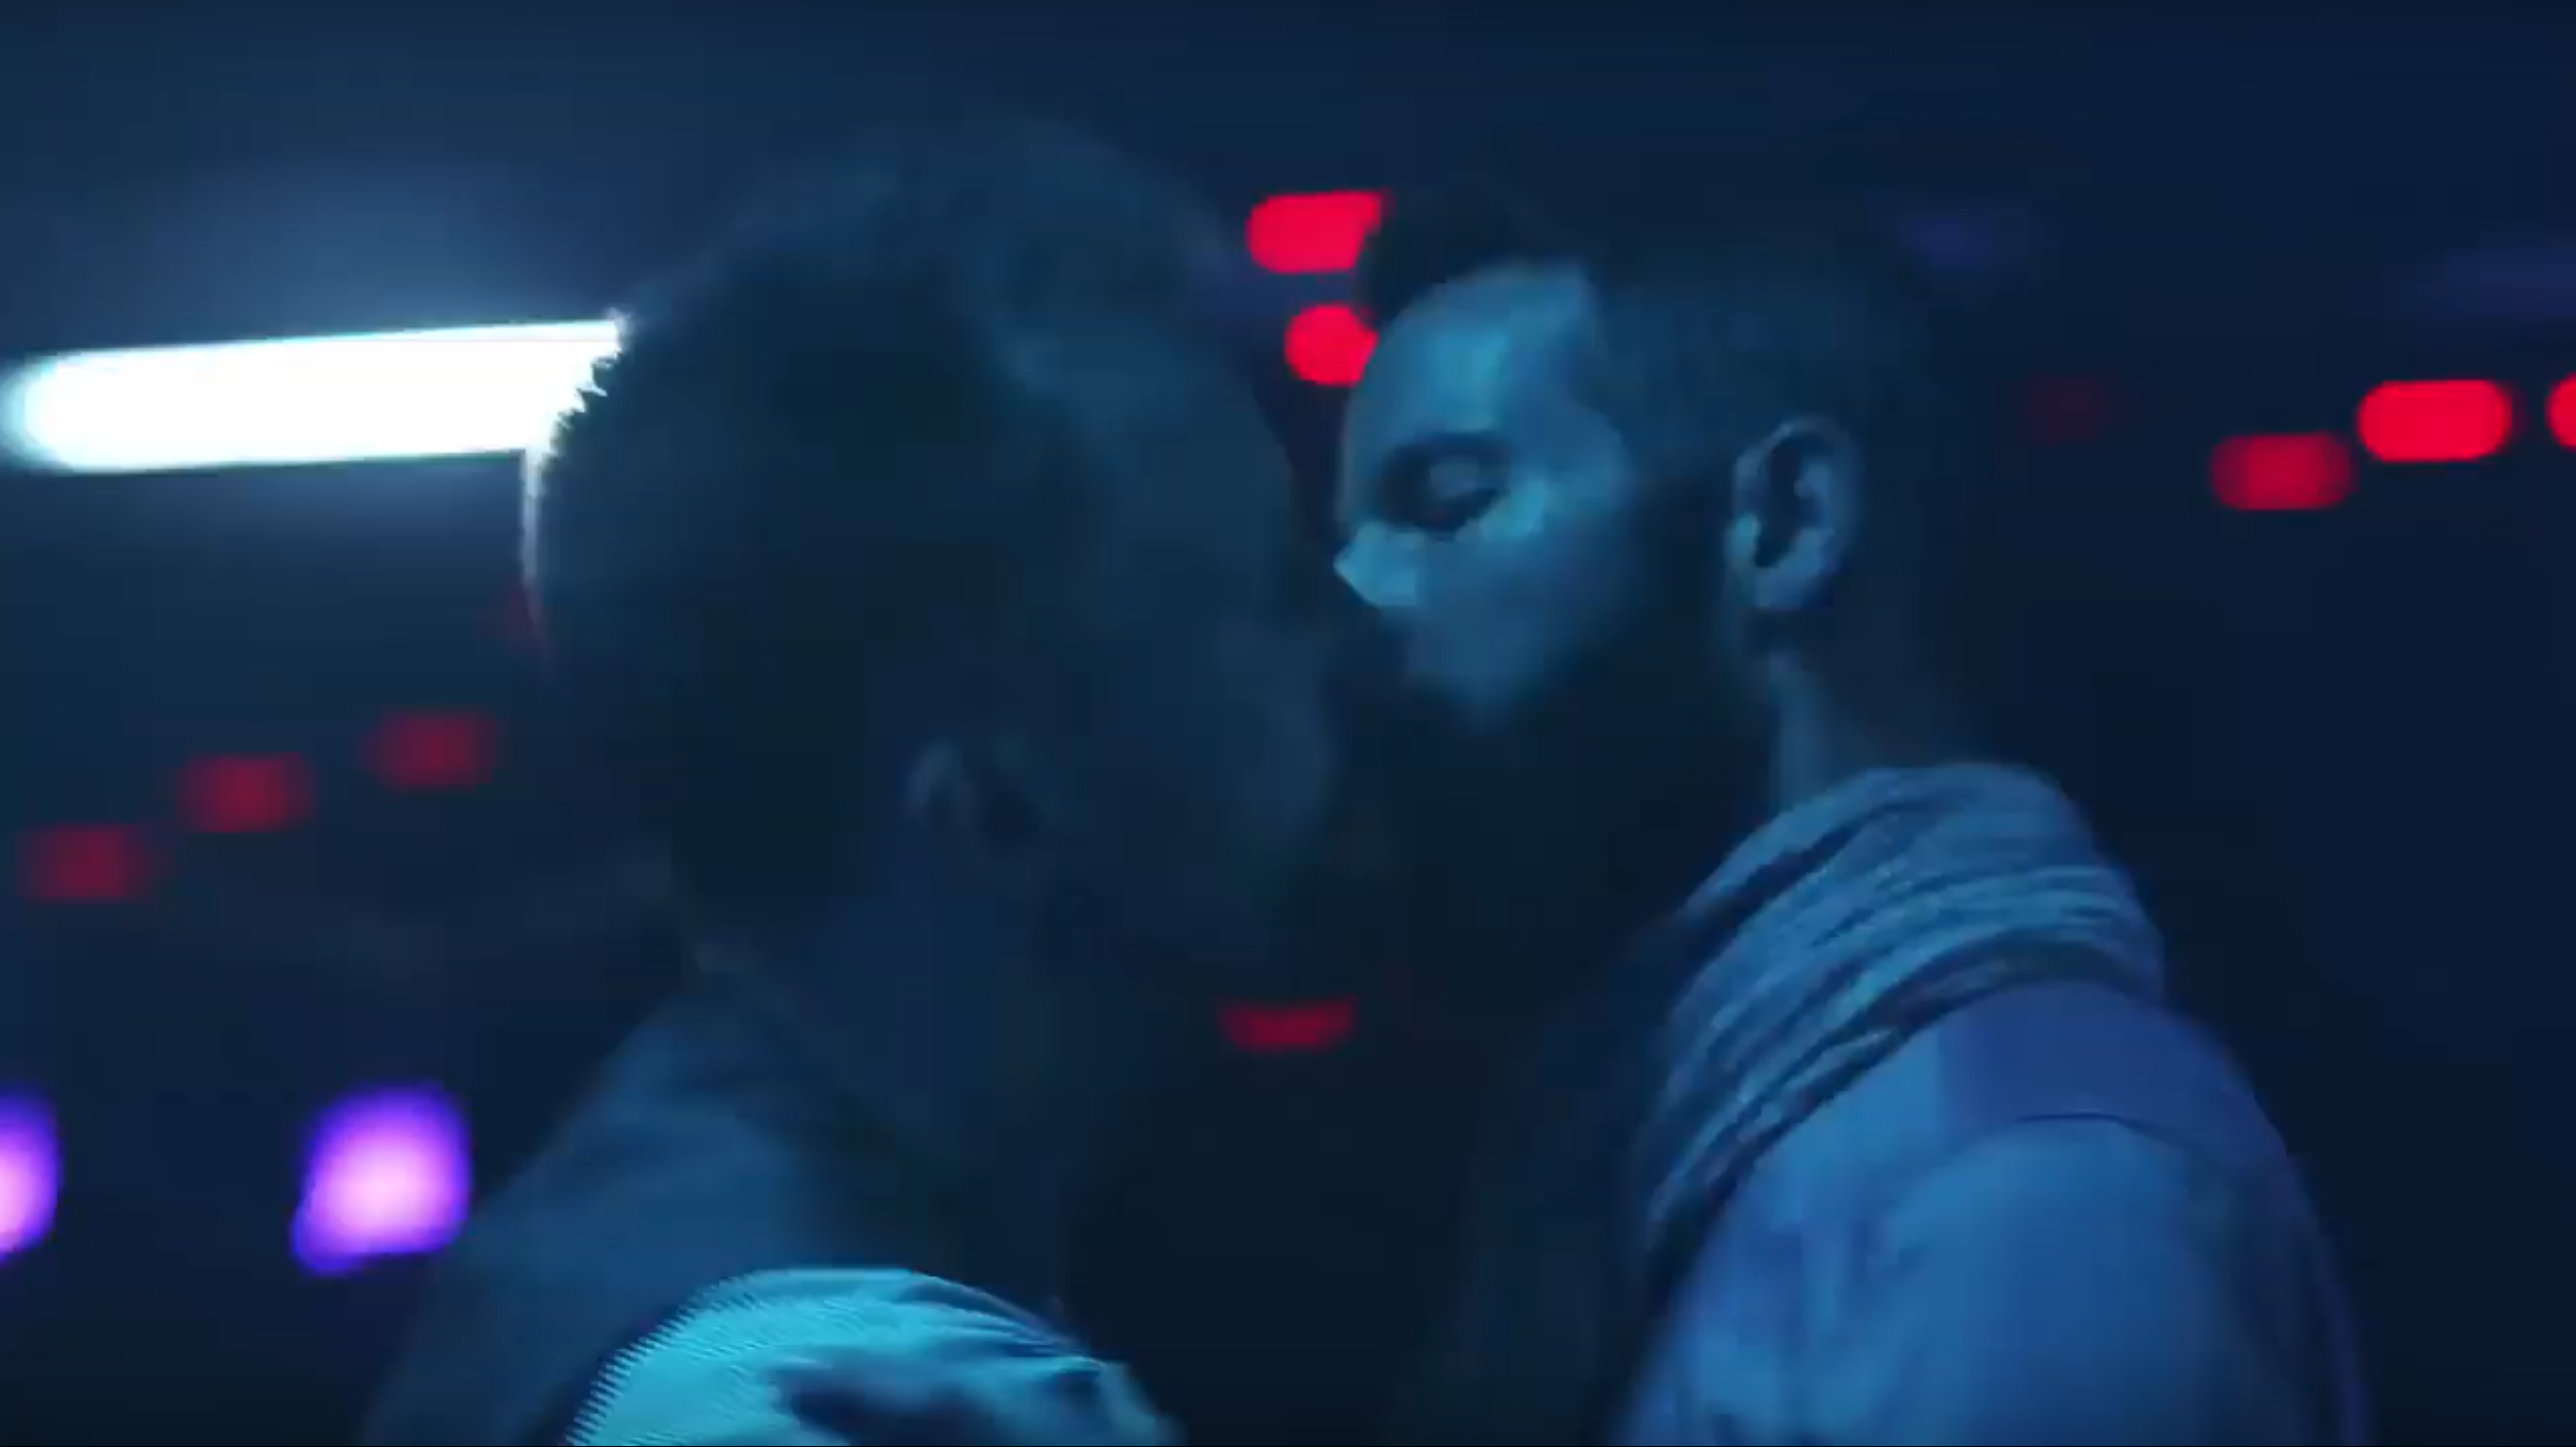 BMW ad gay kiss